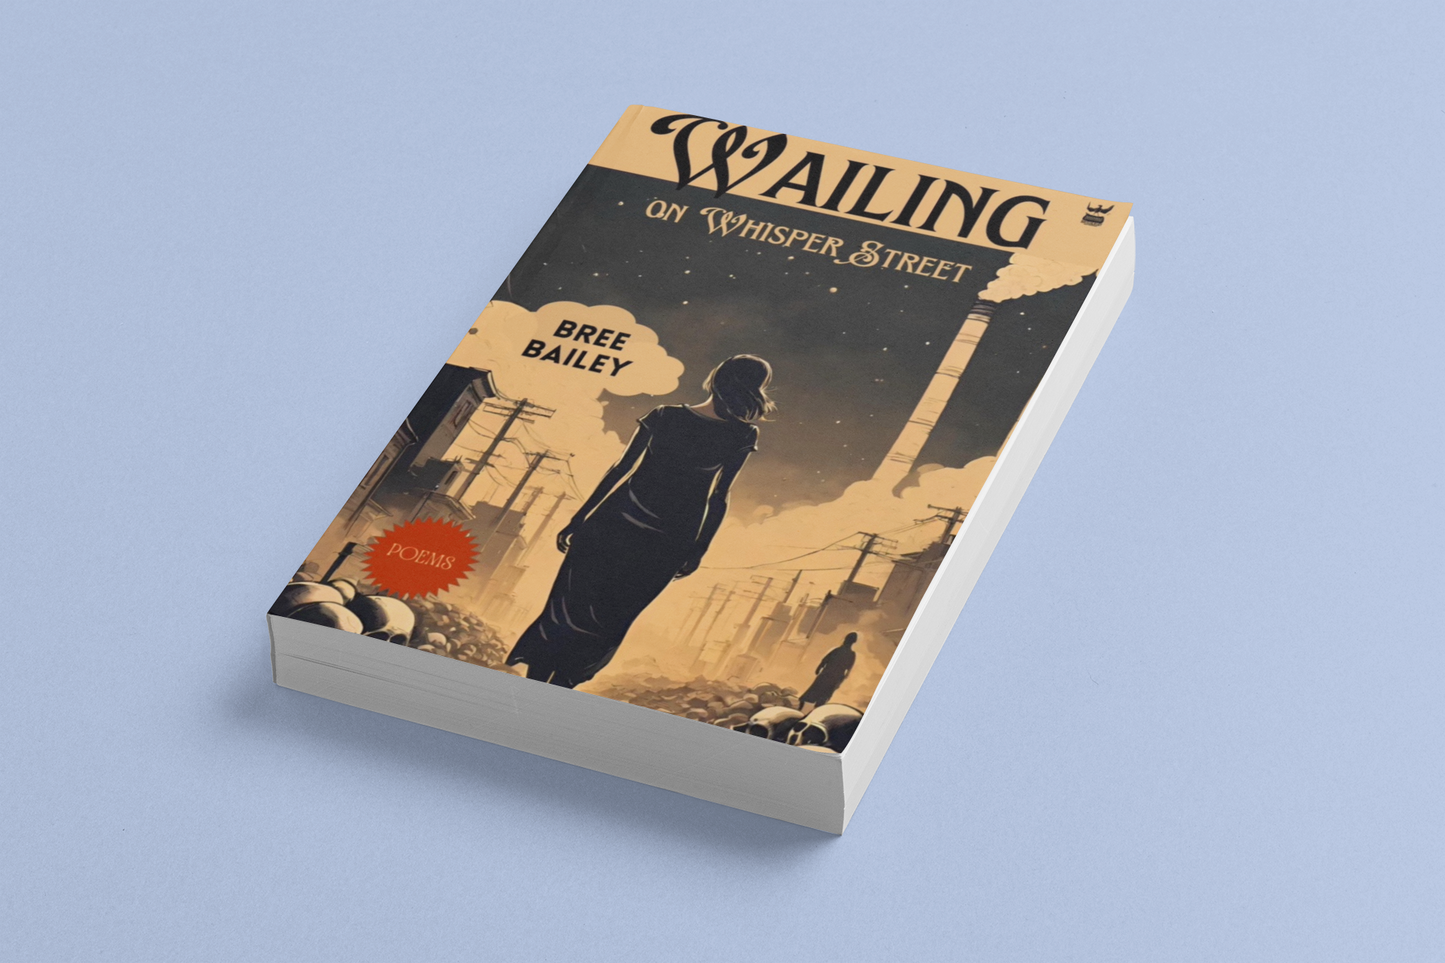 Wailing On Whisper Street by Bree Bailey